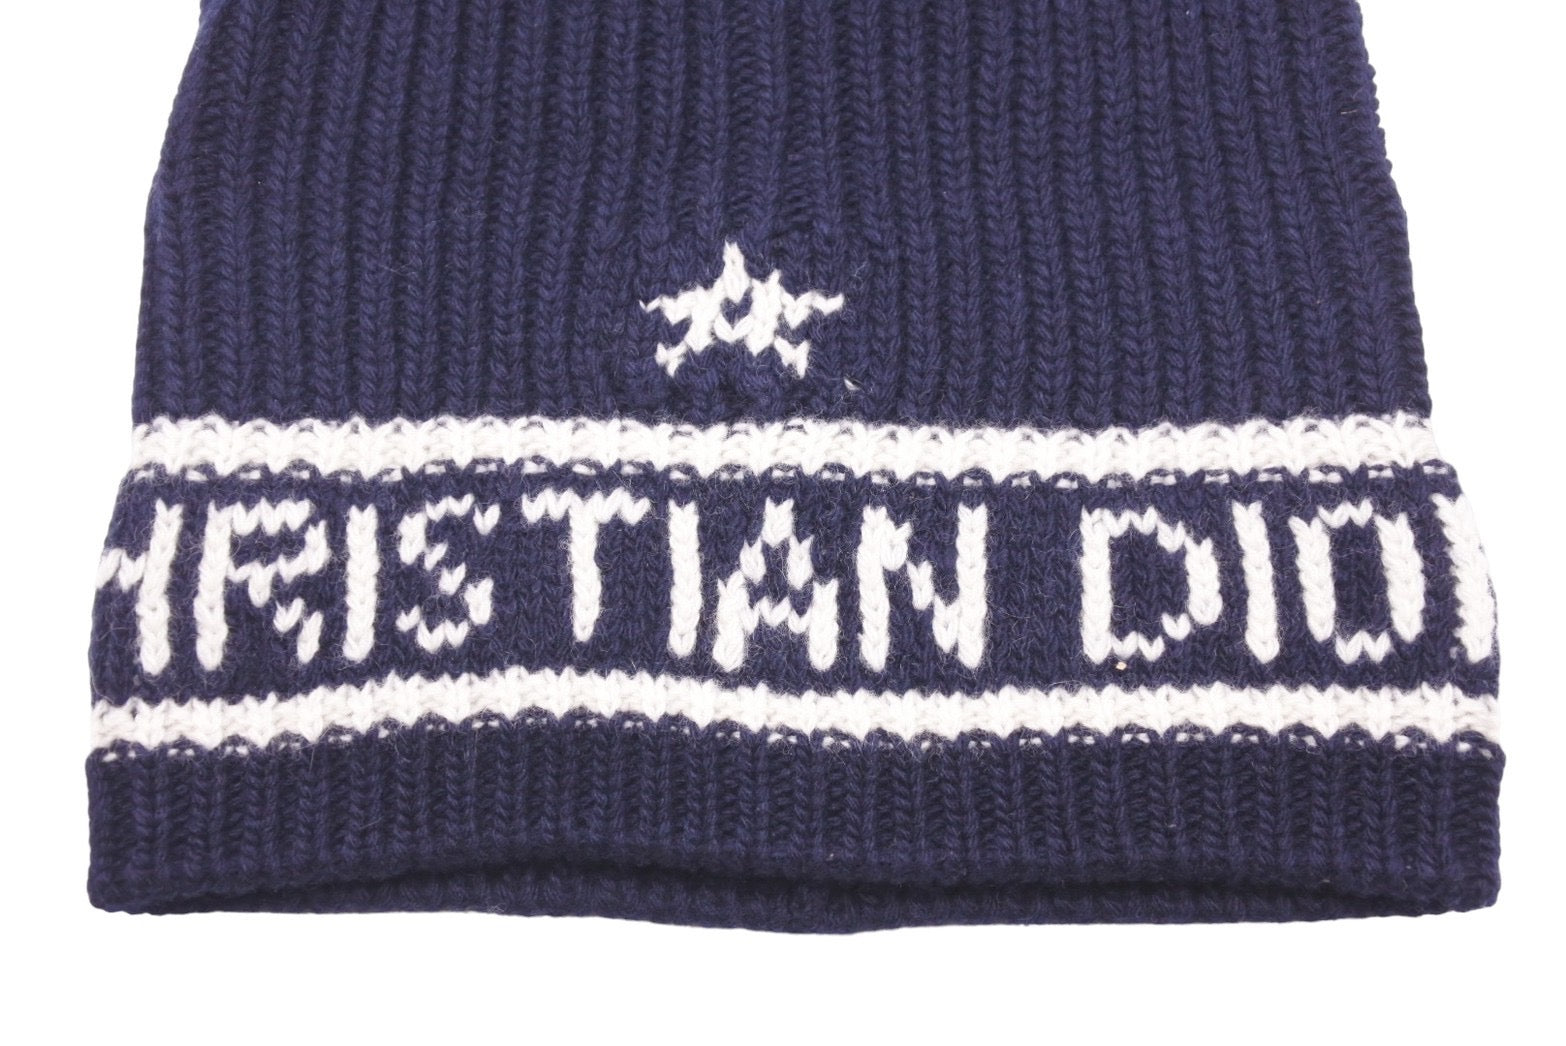 ChristianDior クリスチャンディオール ロゴ ニット帽 帽子